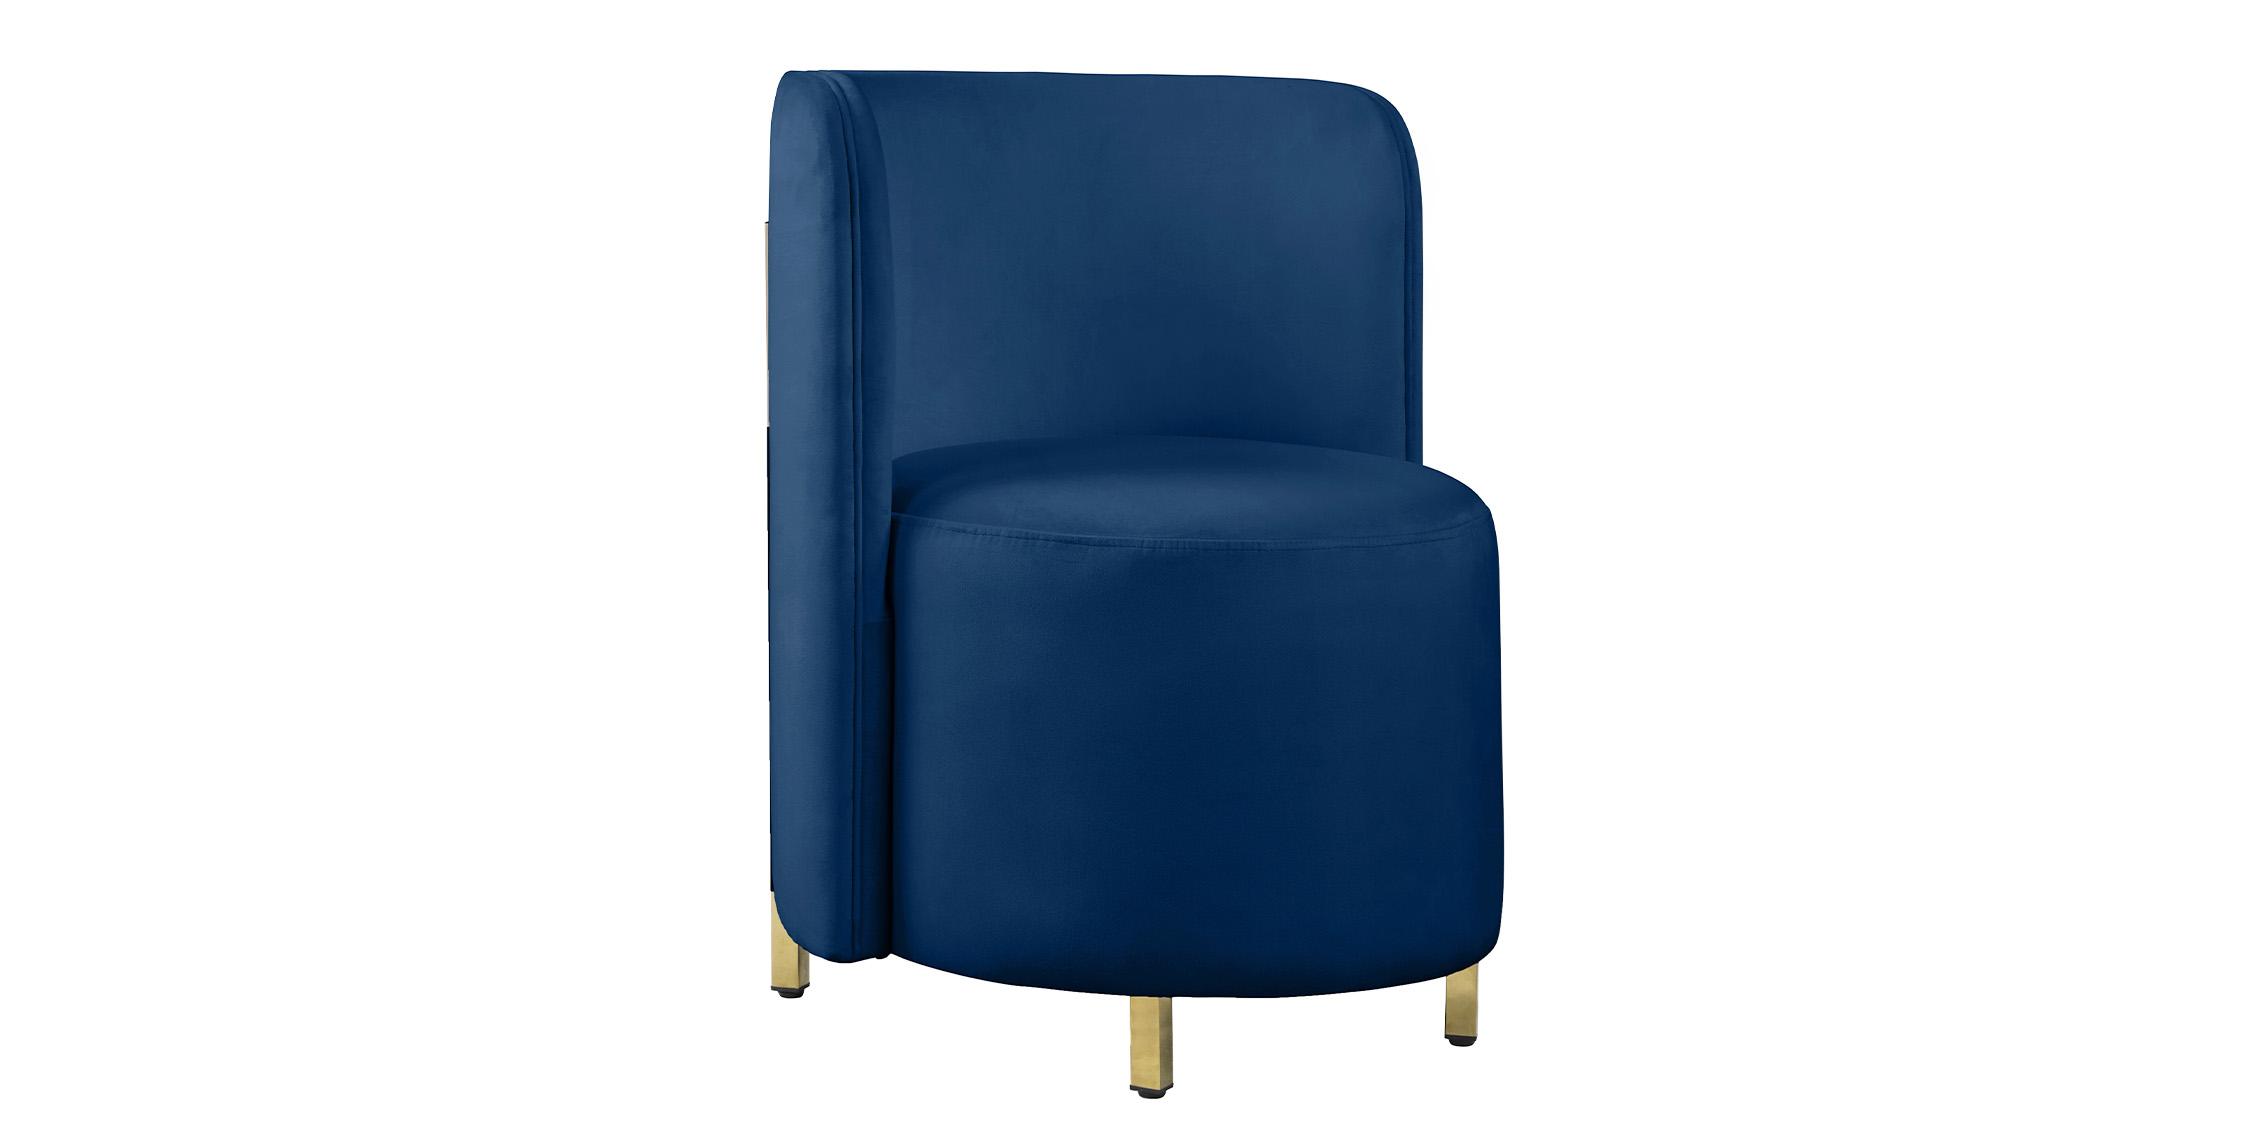 Contemporary, Modern Accent Chair ROTUNDA 518Navy-C 518Navy-C in Navy Velvet